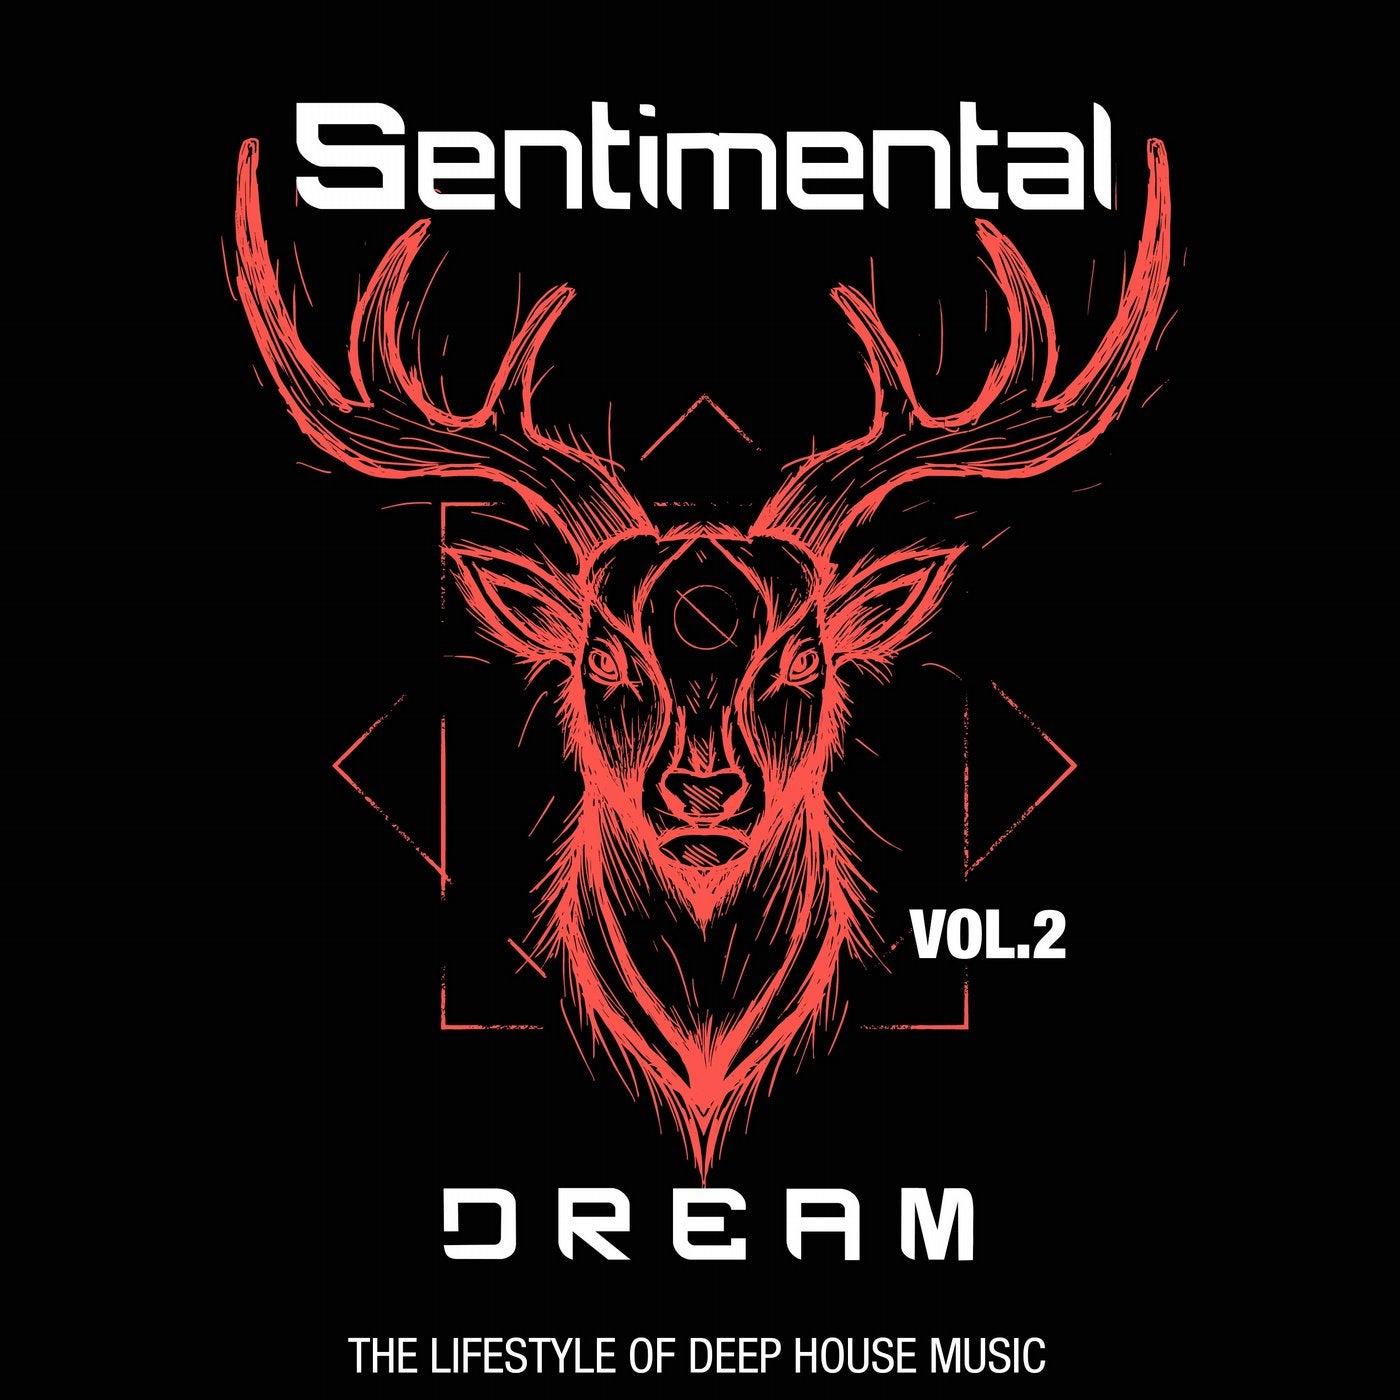 Sentimental Dream, Vol. 2 (The Lifestyle of Deep House Music)